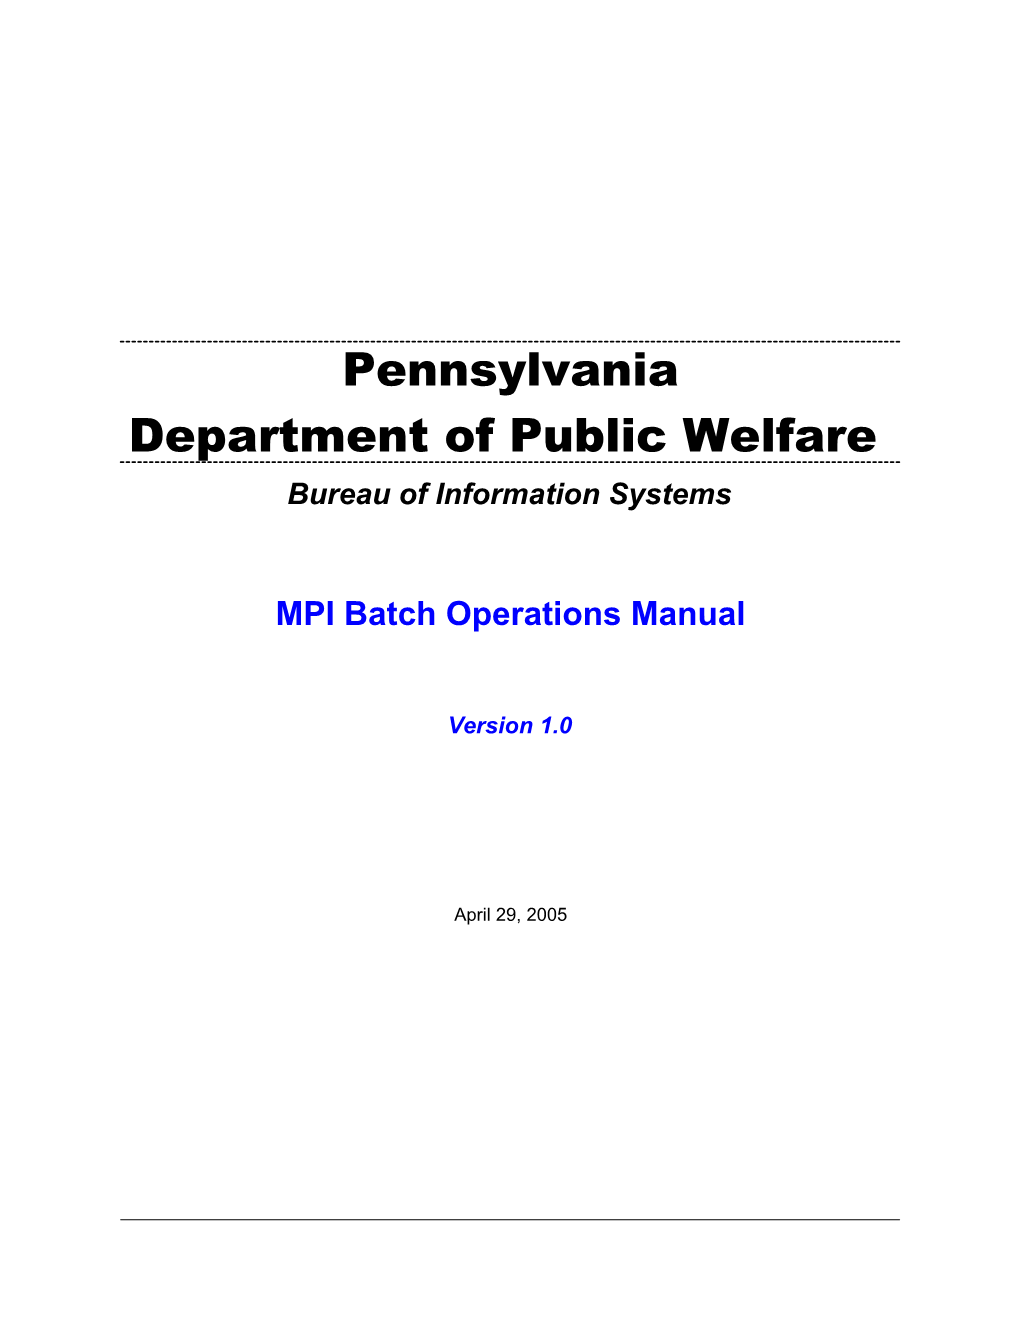 MPI Batch Operations Manual